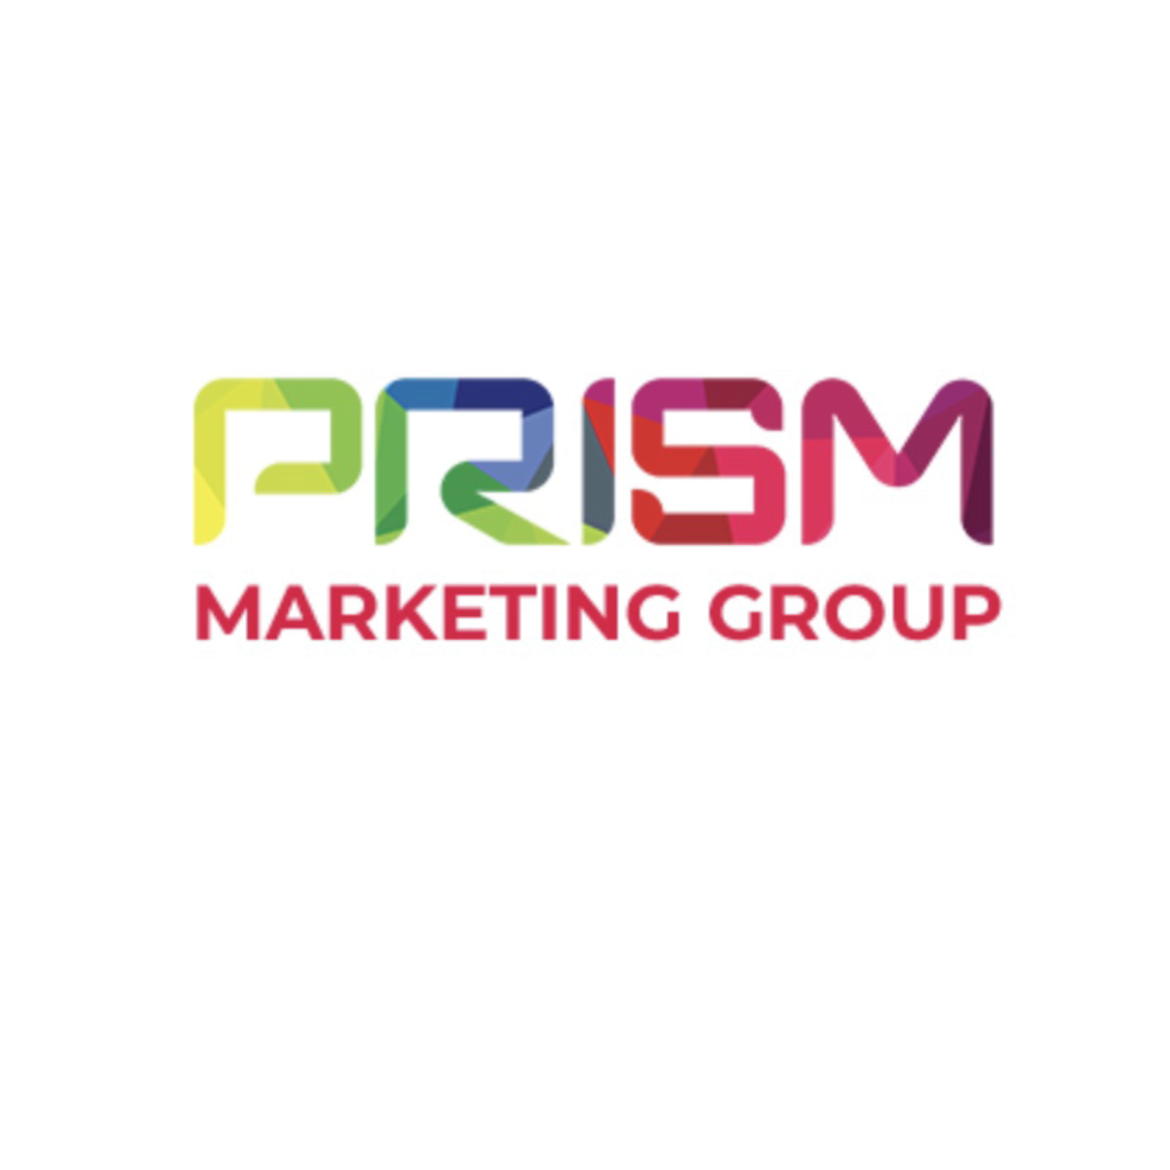 Prism Marketing Group